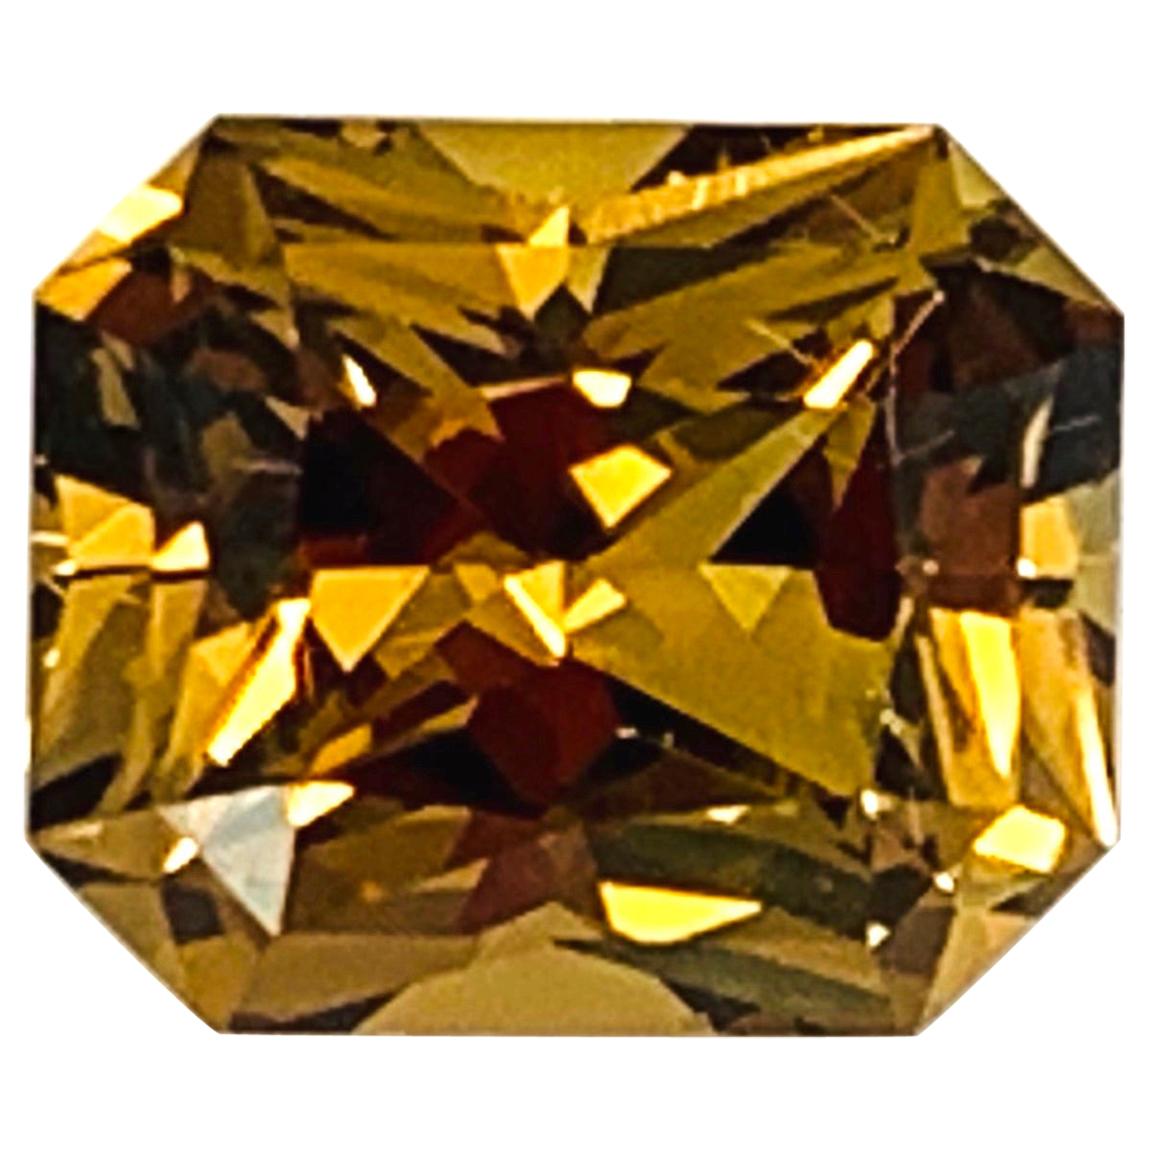 6.40 Carat Octagon Cut Golden Zircon, Unset Loose Gemstone